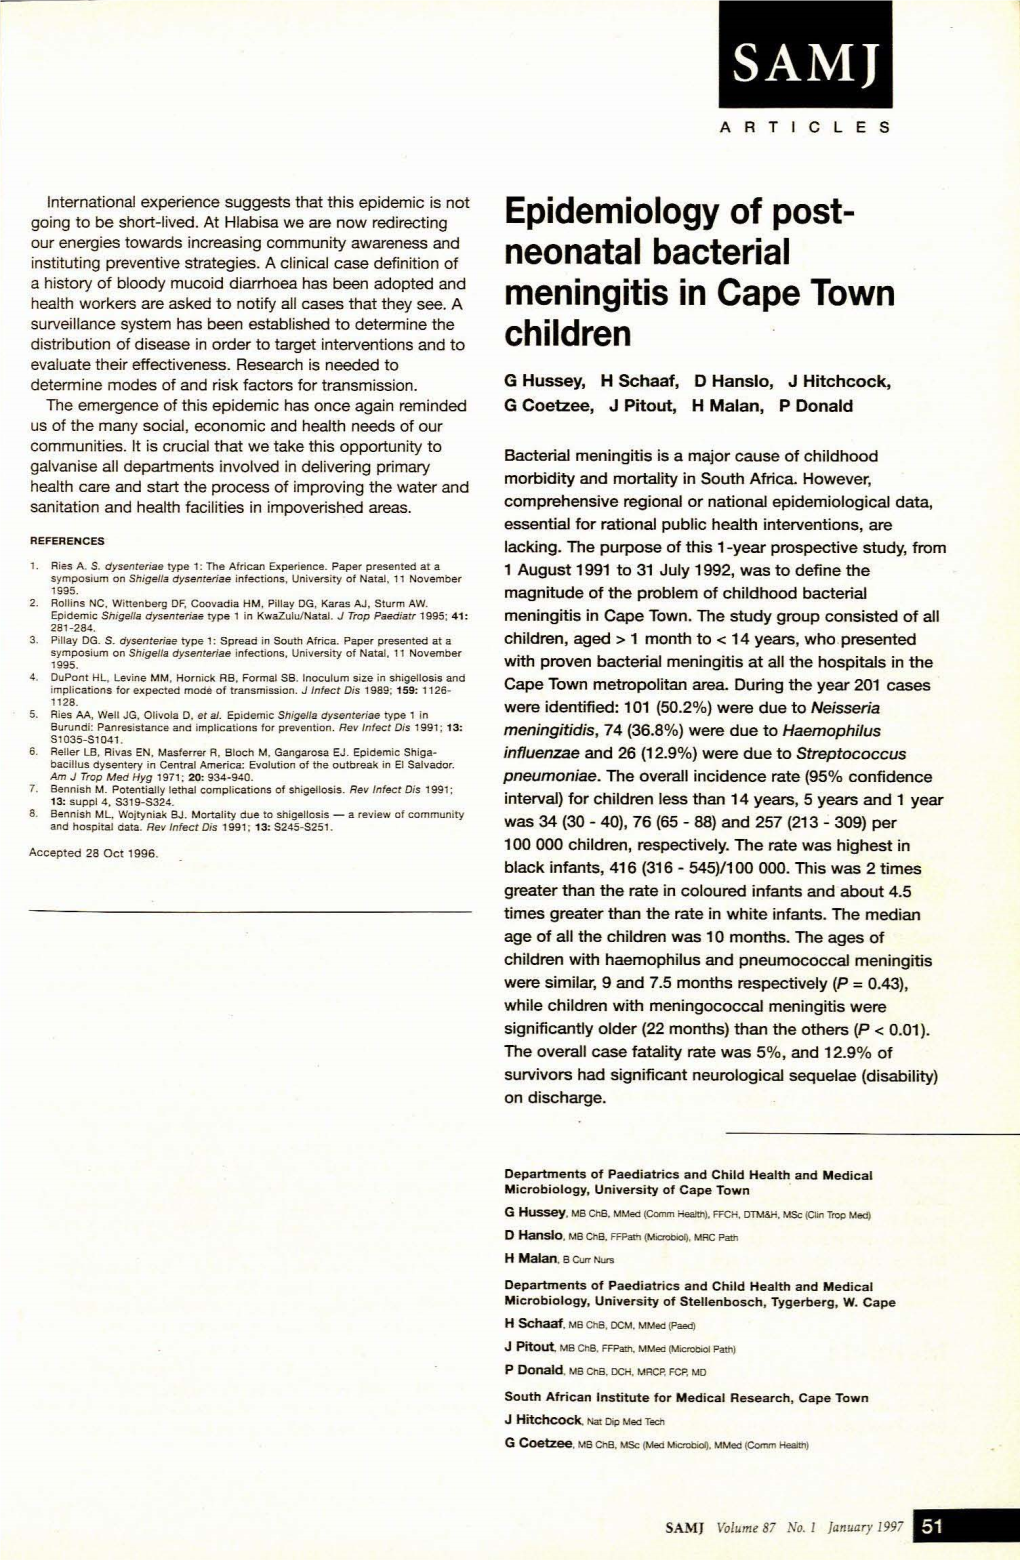 Neonatal Bacterial Meningitis in Cape Town Children